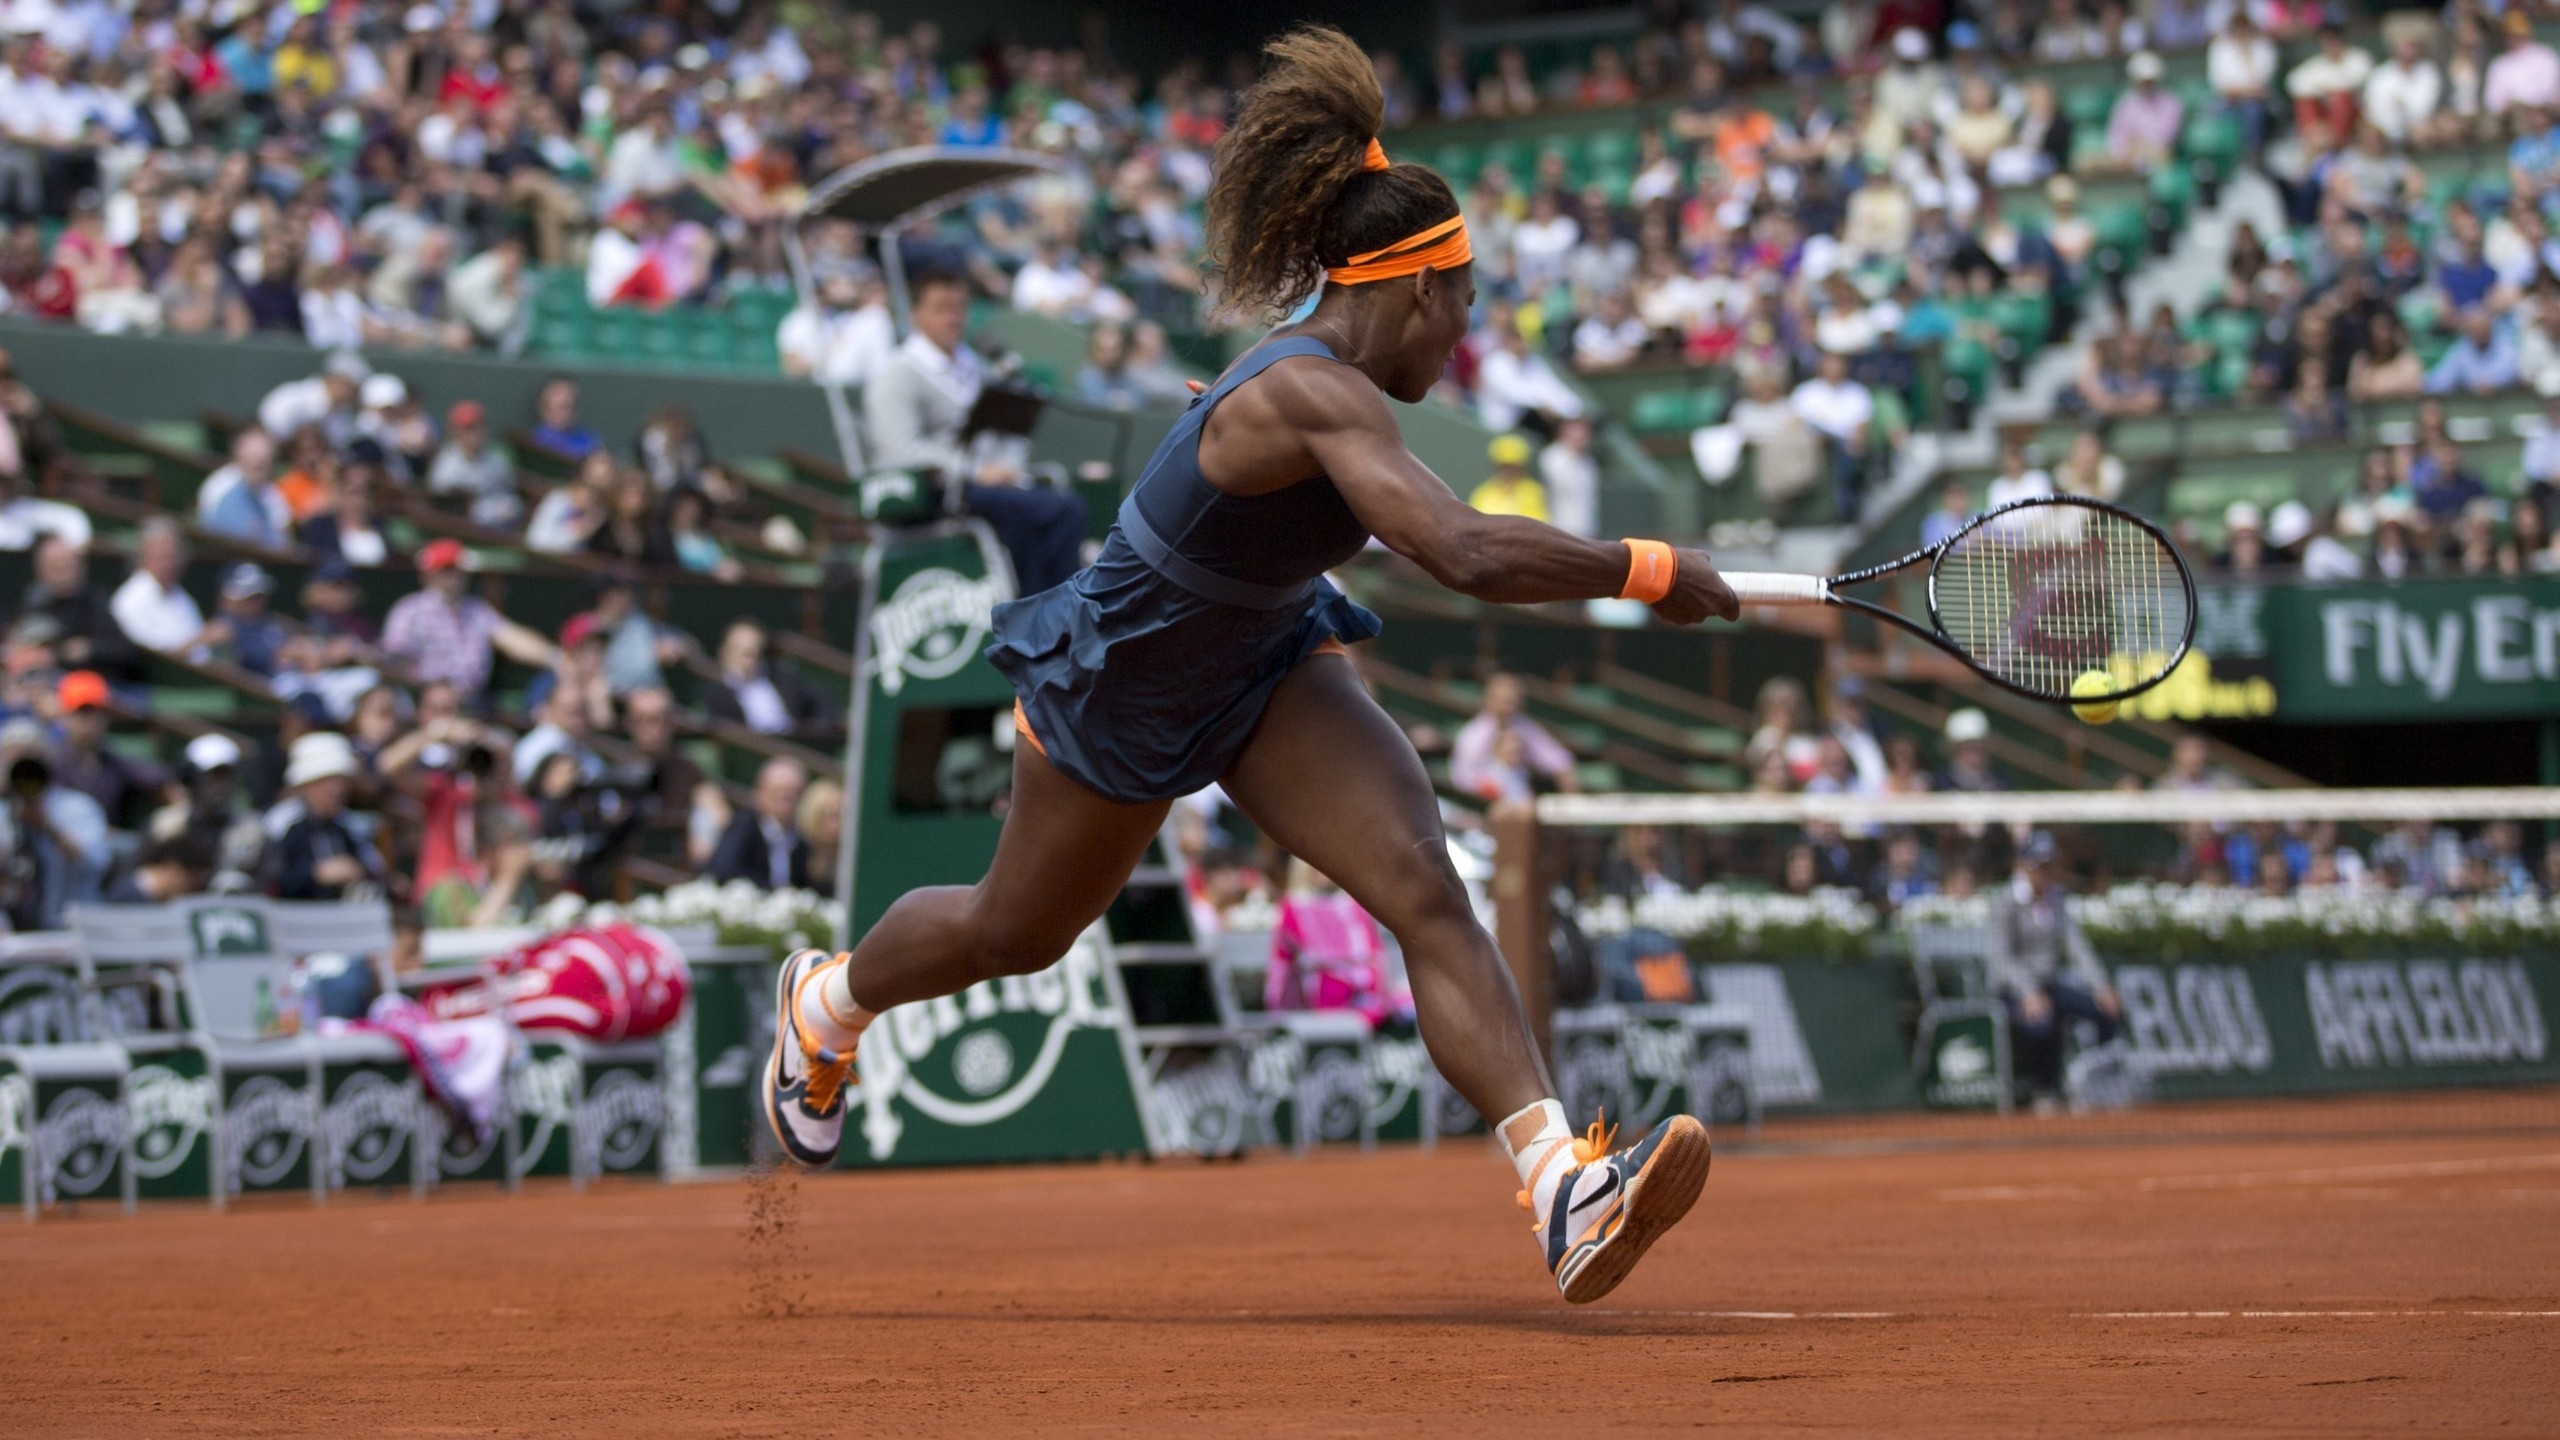 Serena Williams for 2560x1440 HDTV resolution